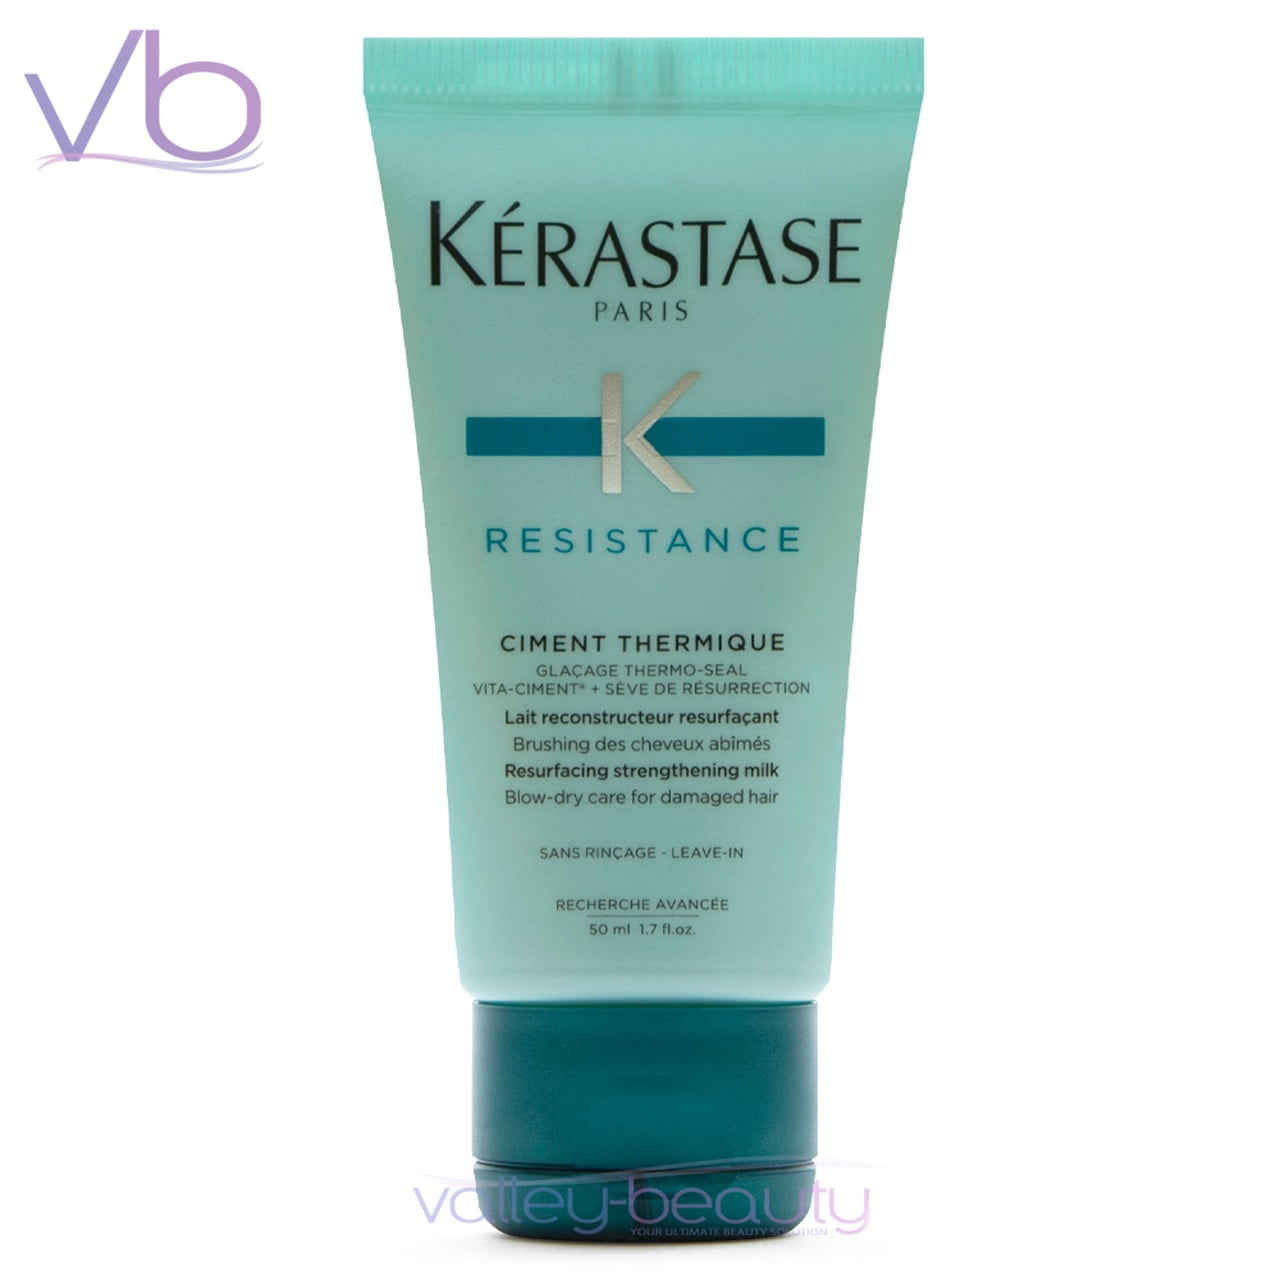 Kerastase Resistance Thermique, Hair 50ml - Walmart.com